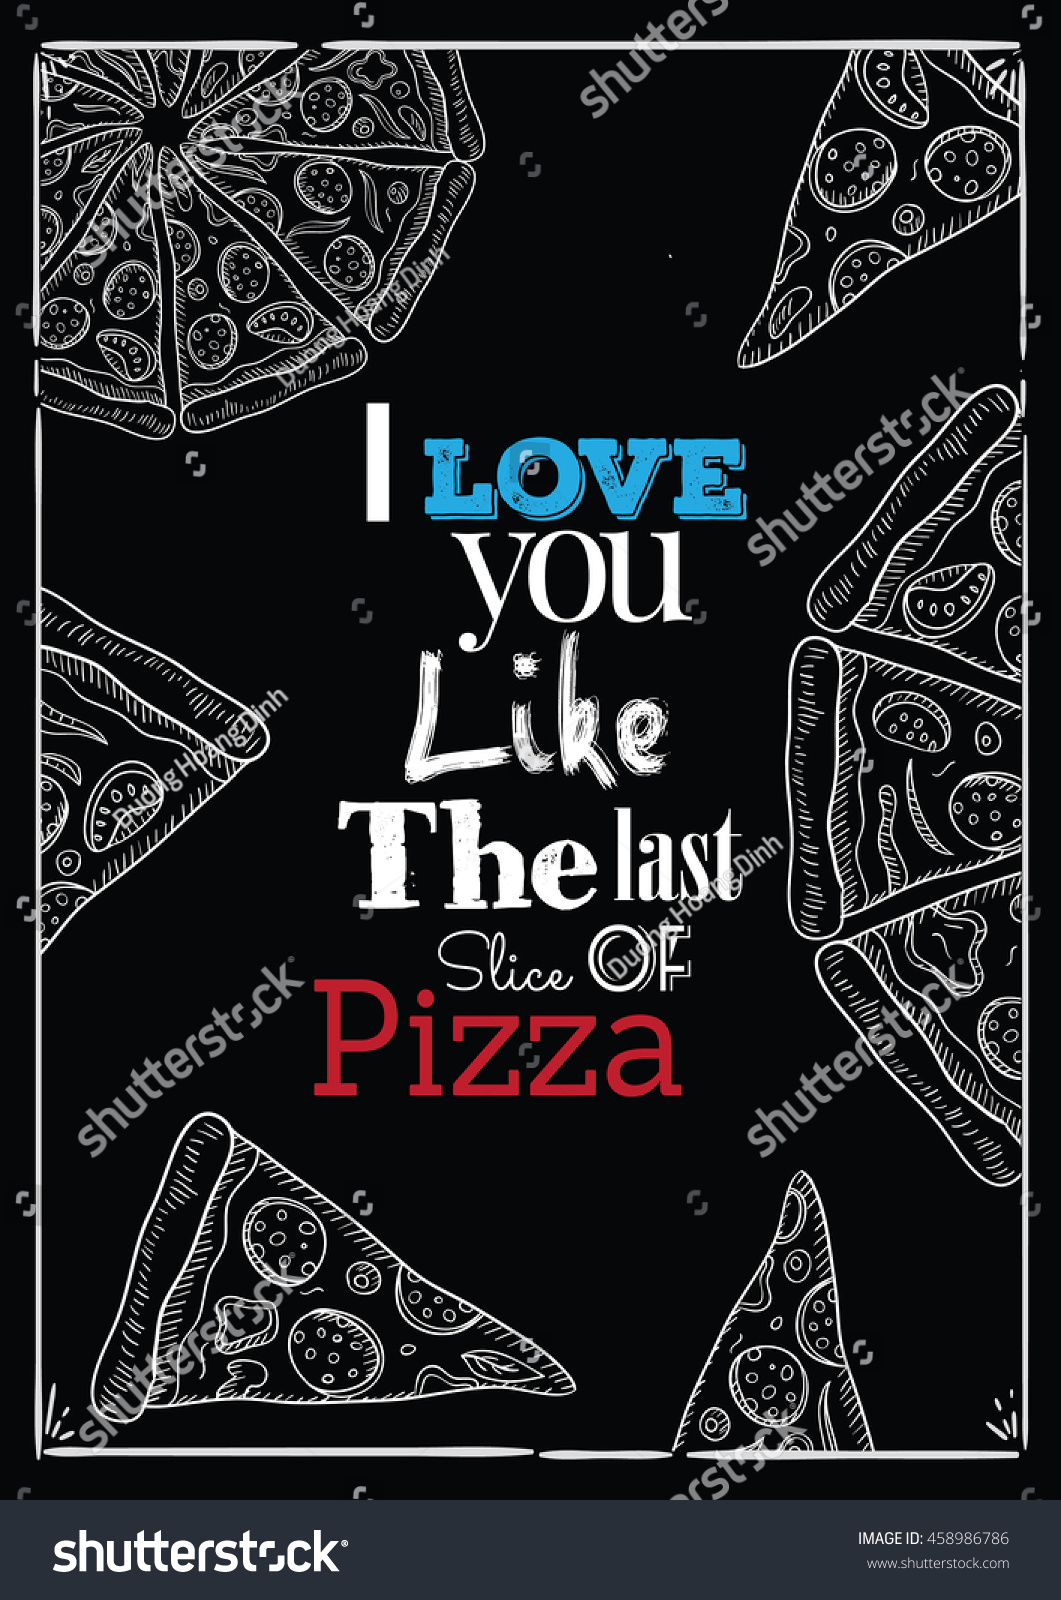 Pizza quote I love you like the last slice of pizza Blackboard style